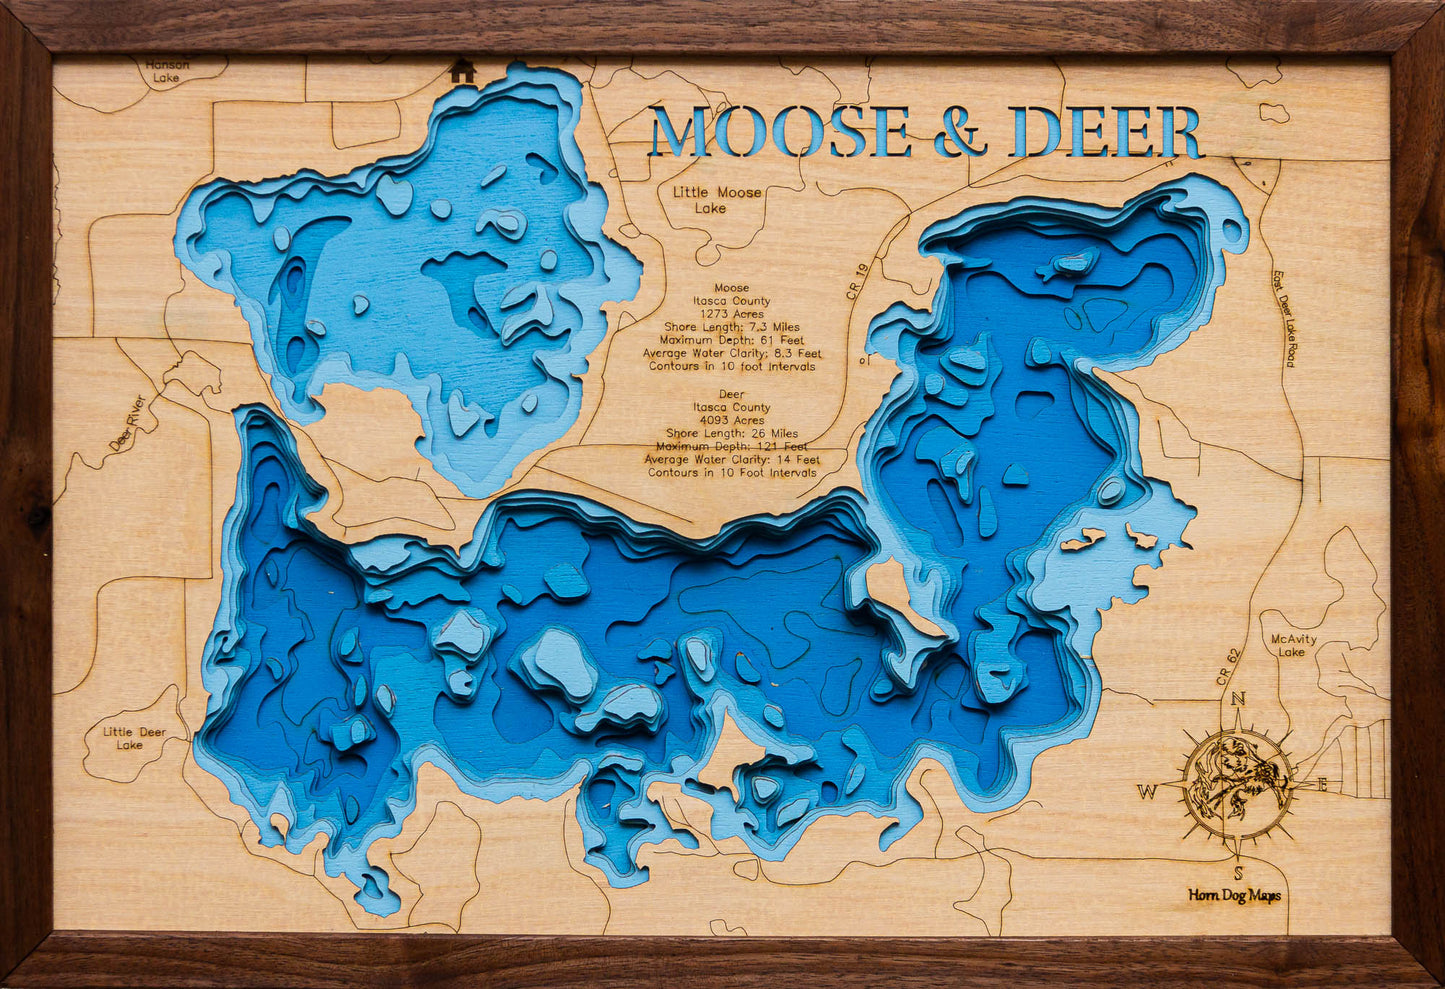 Moose Lake and Deer Lake in Itasca County, MN